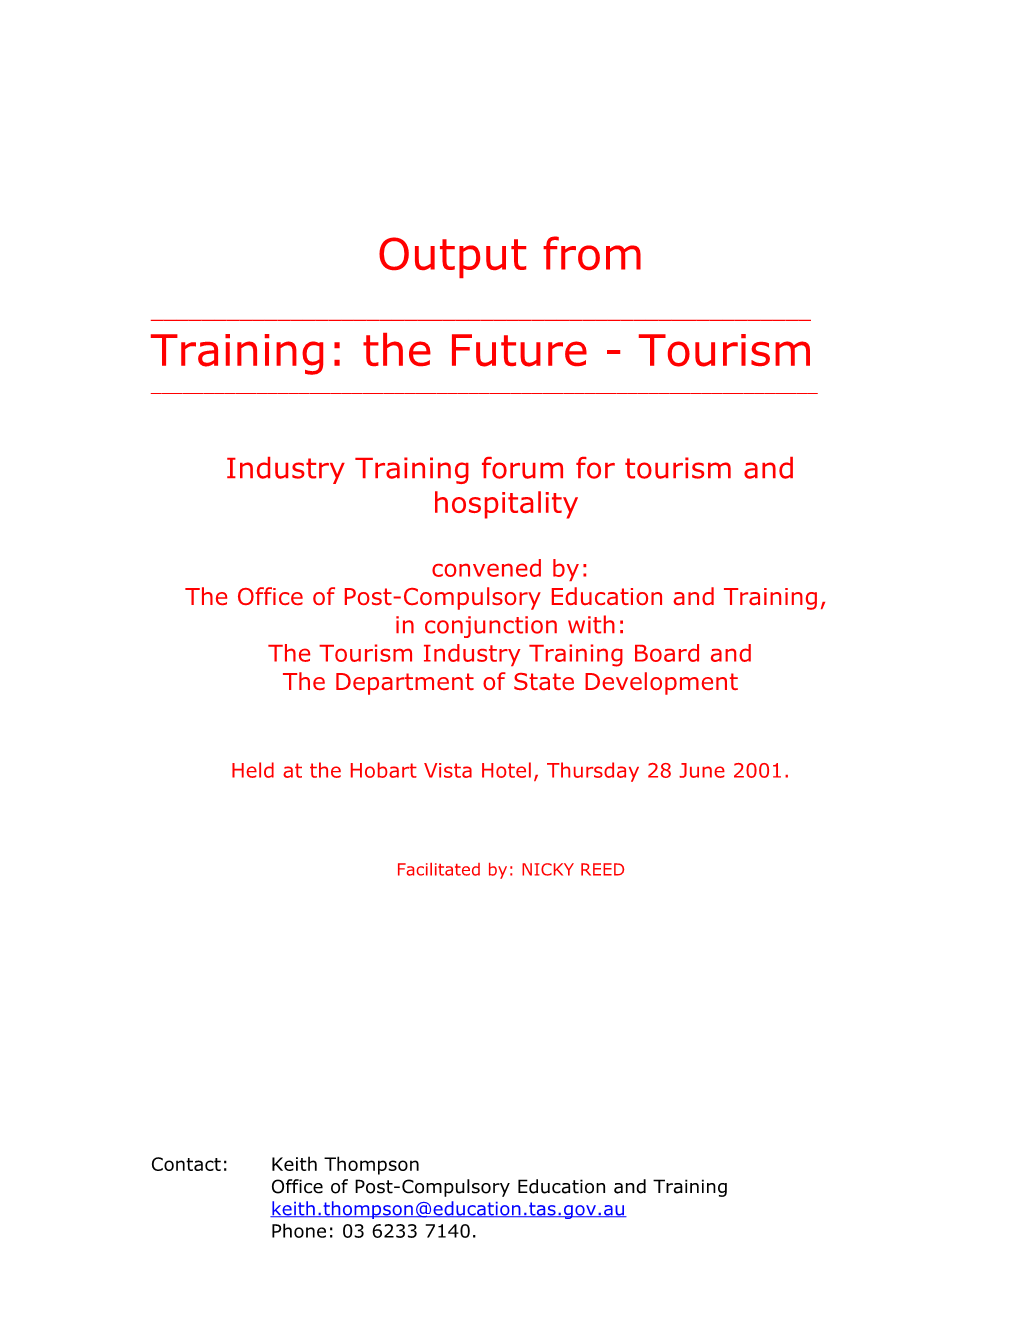 Tourism Forum Report (Word)